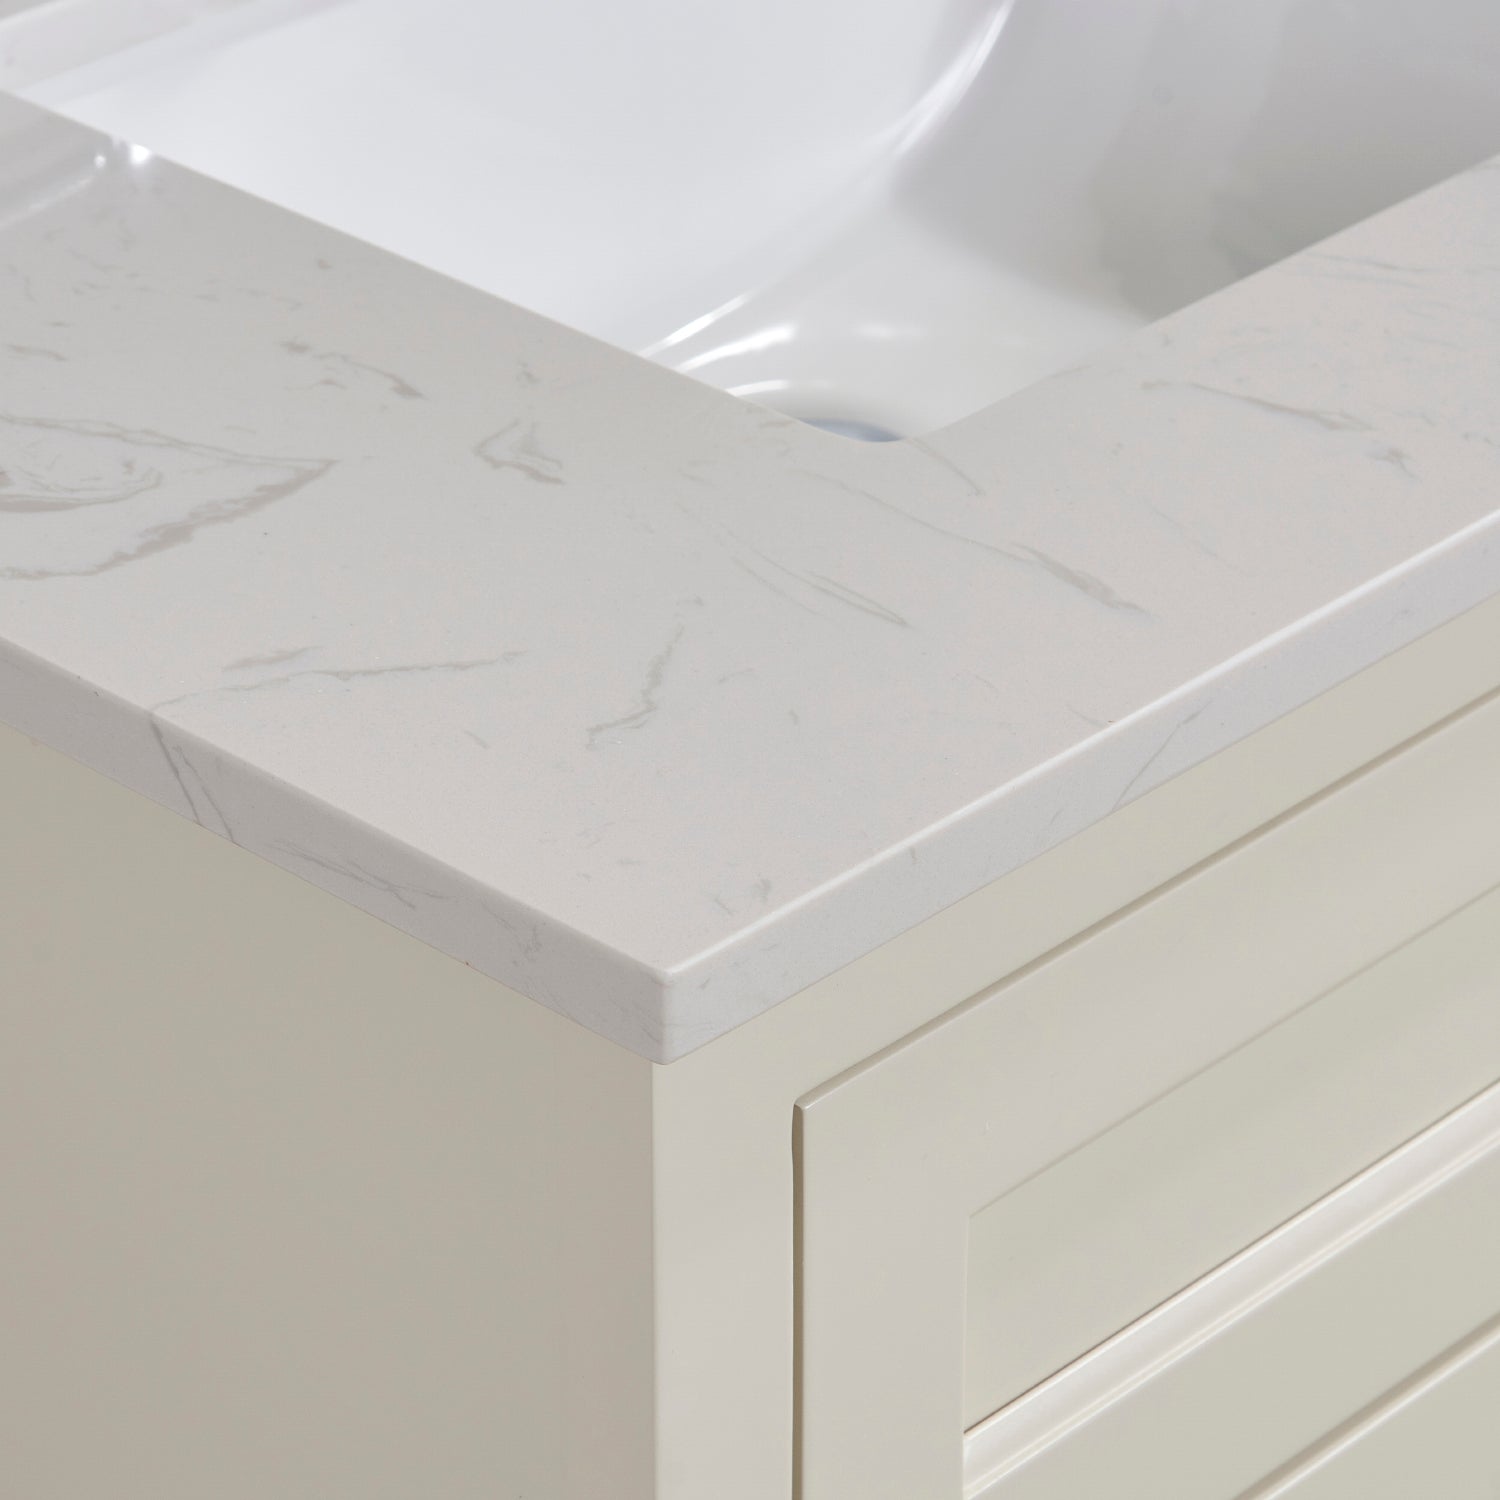 Frosinone Single Sink Bathroom Vanity Countertop in Jazz White